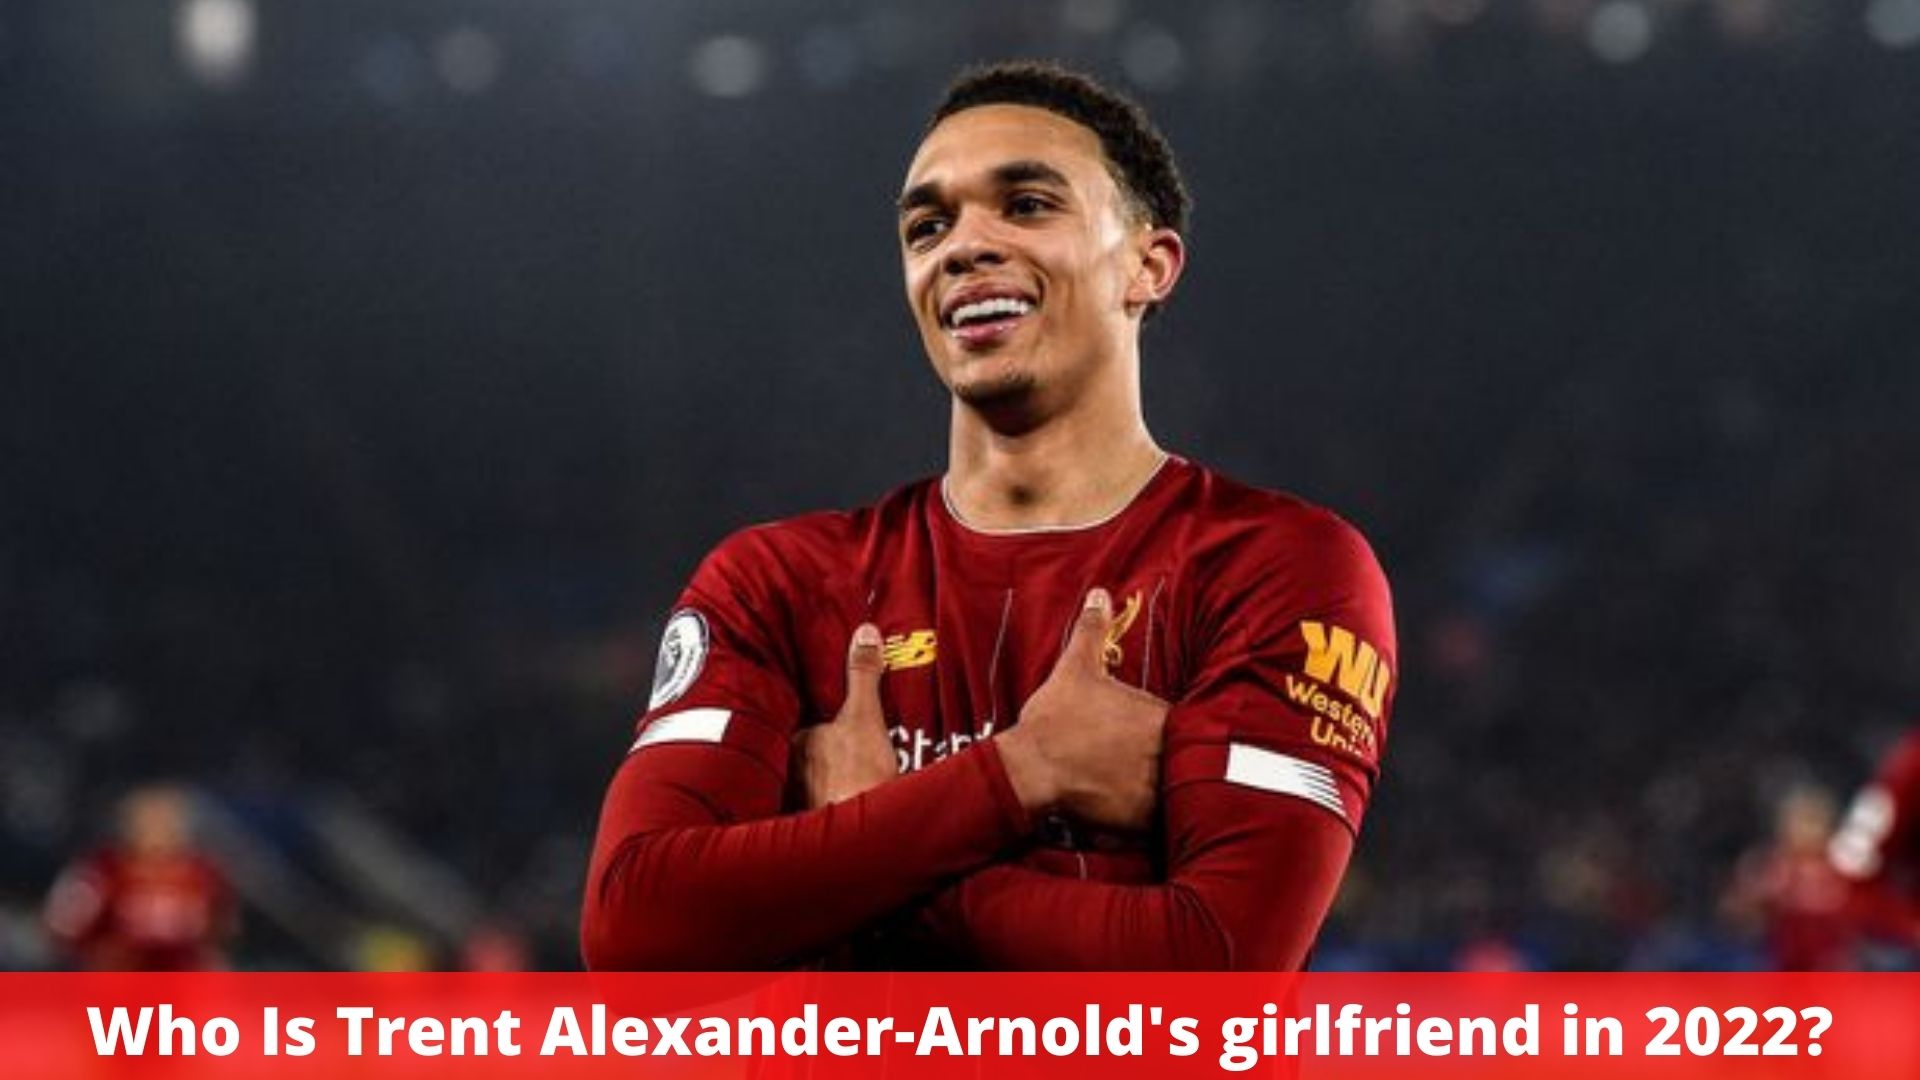 Who Is Trent Alexander-Arnold's girlfriend in 2022?